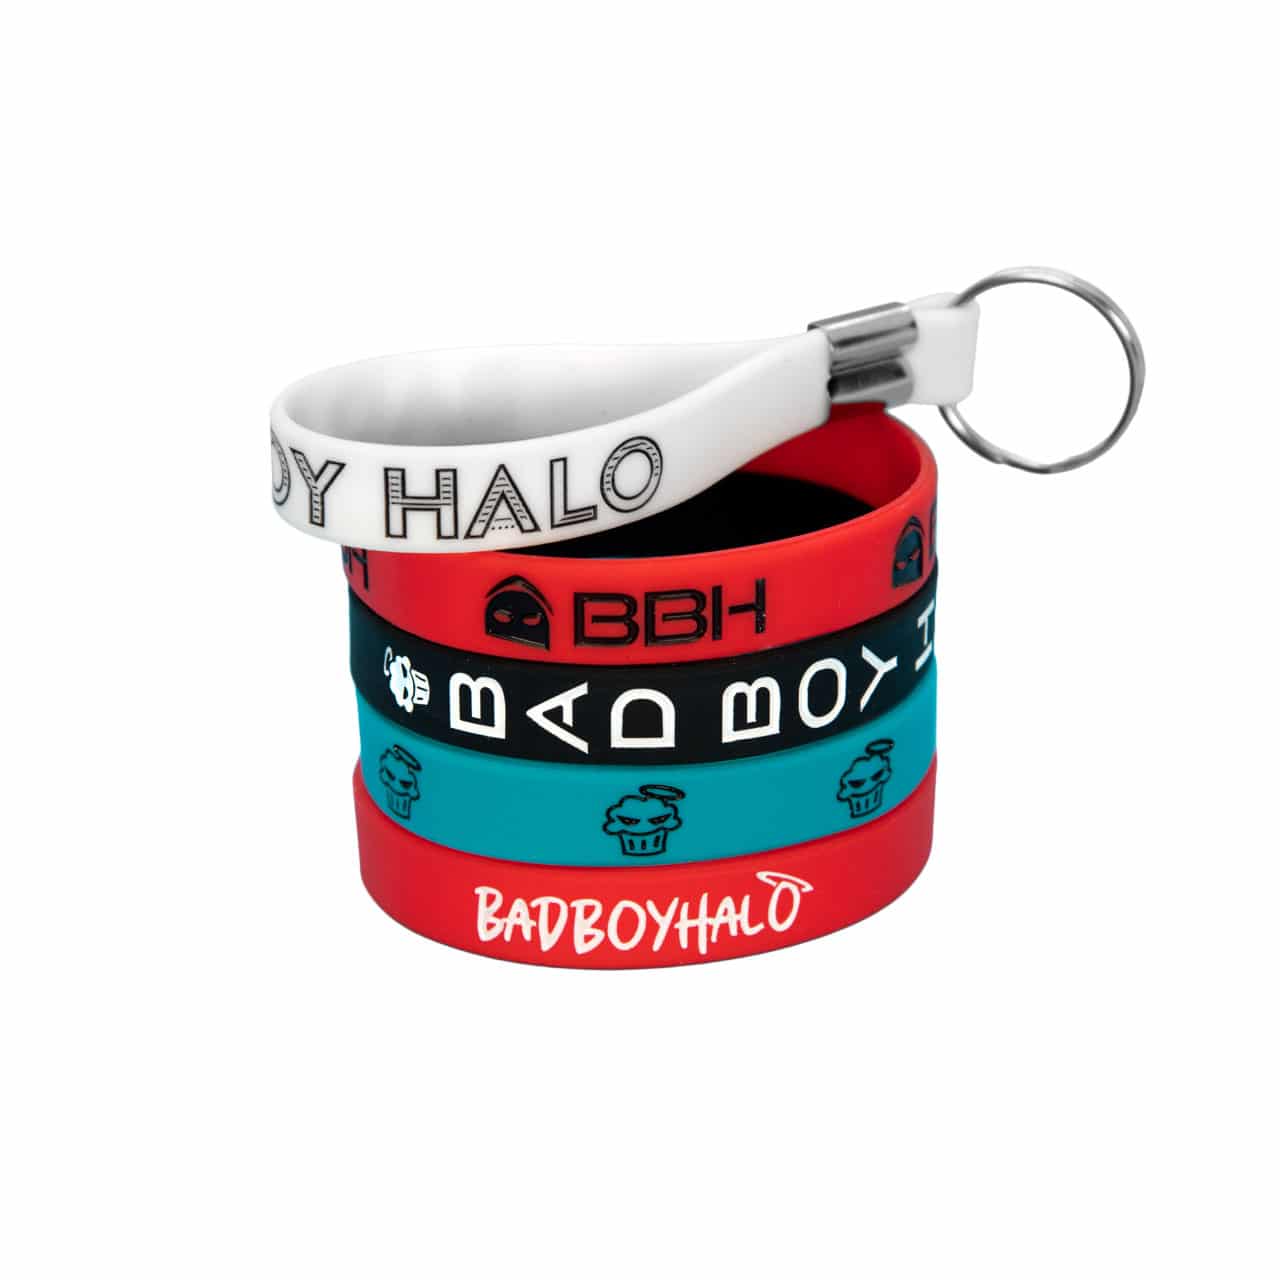 BadBoyHalo Wristband 5-pack